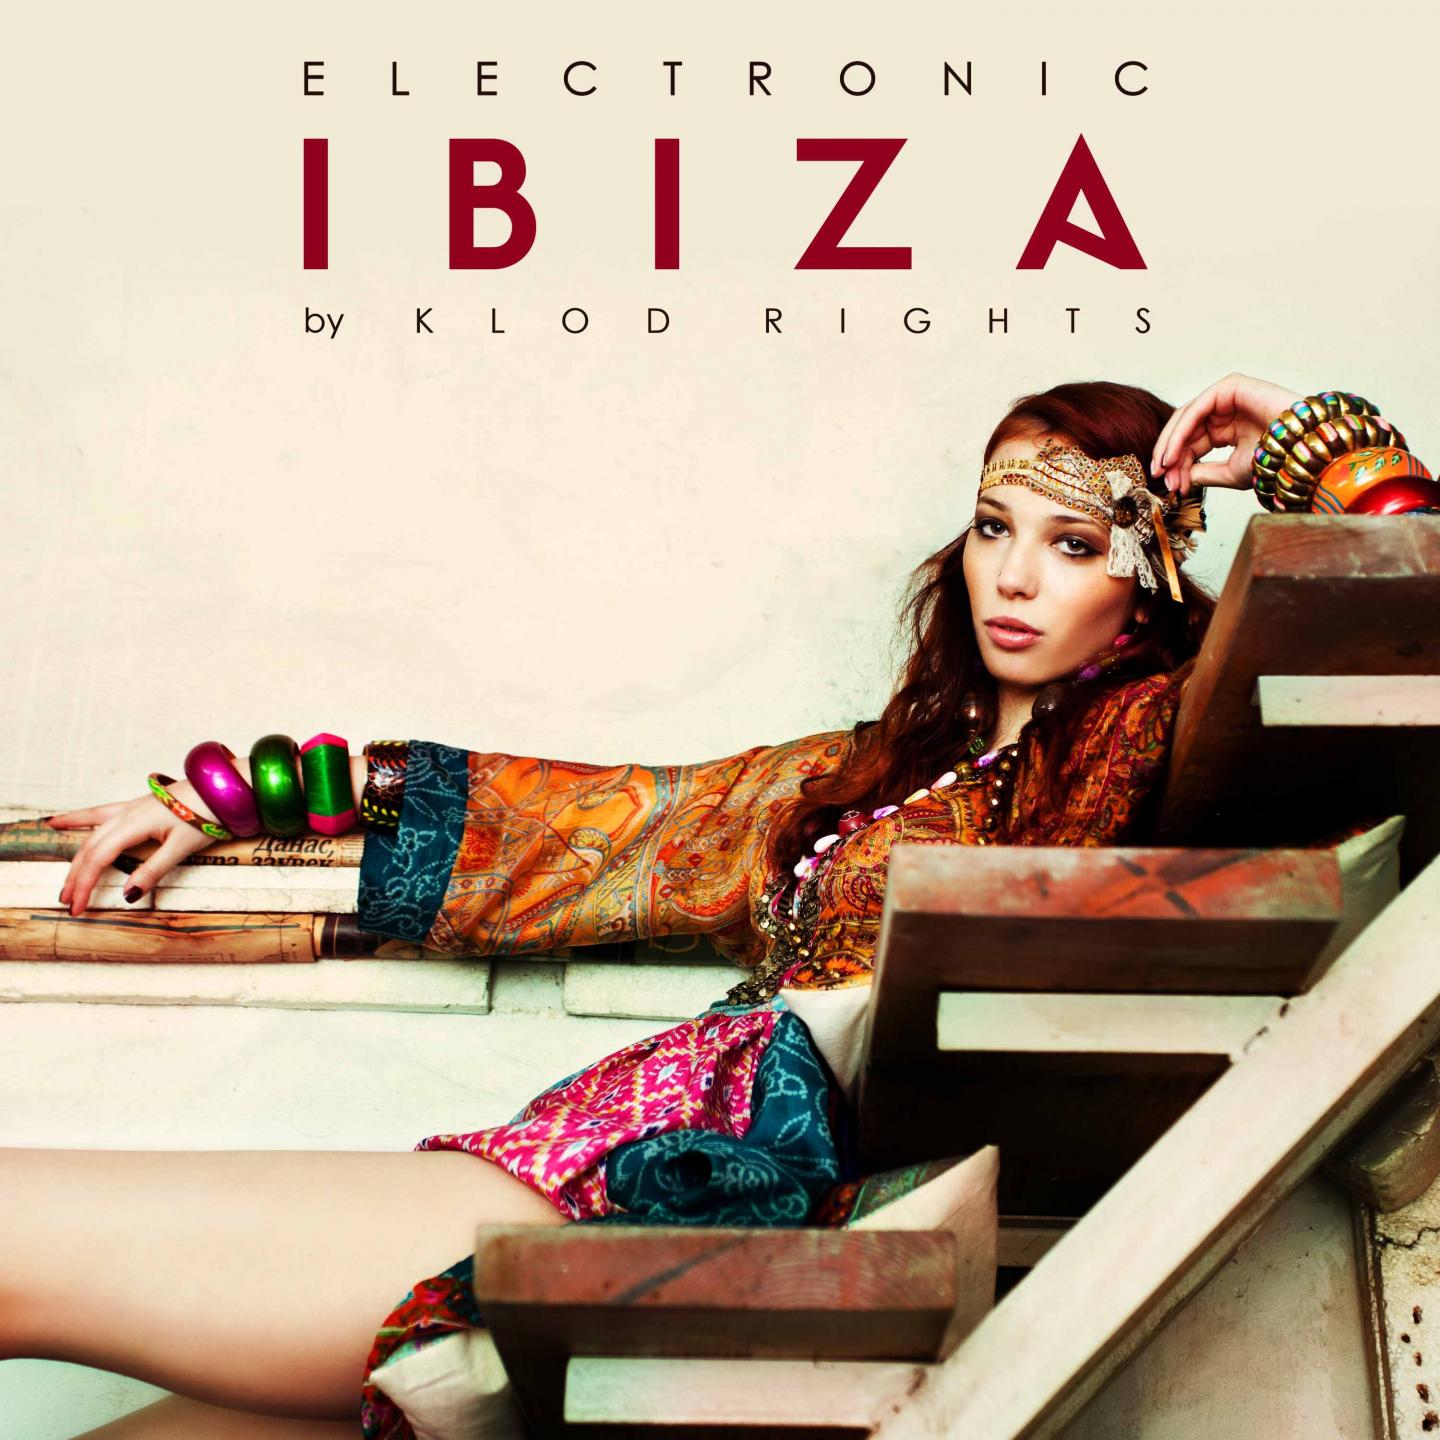 Electronic Ibiza